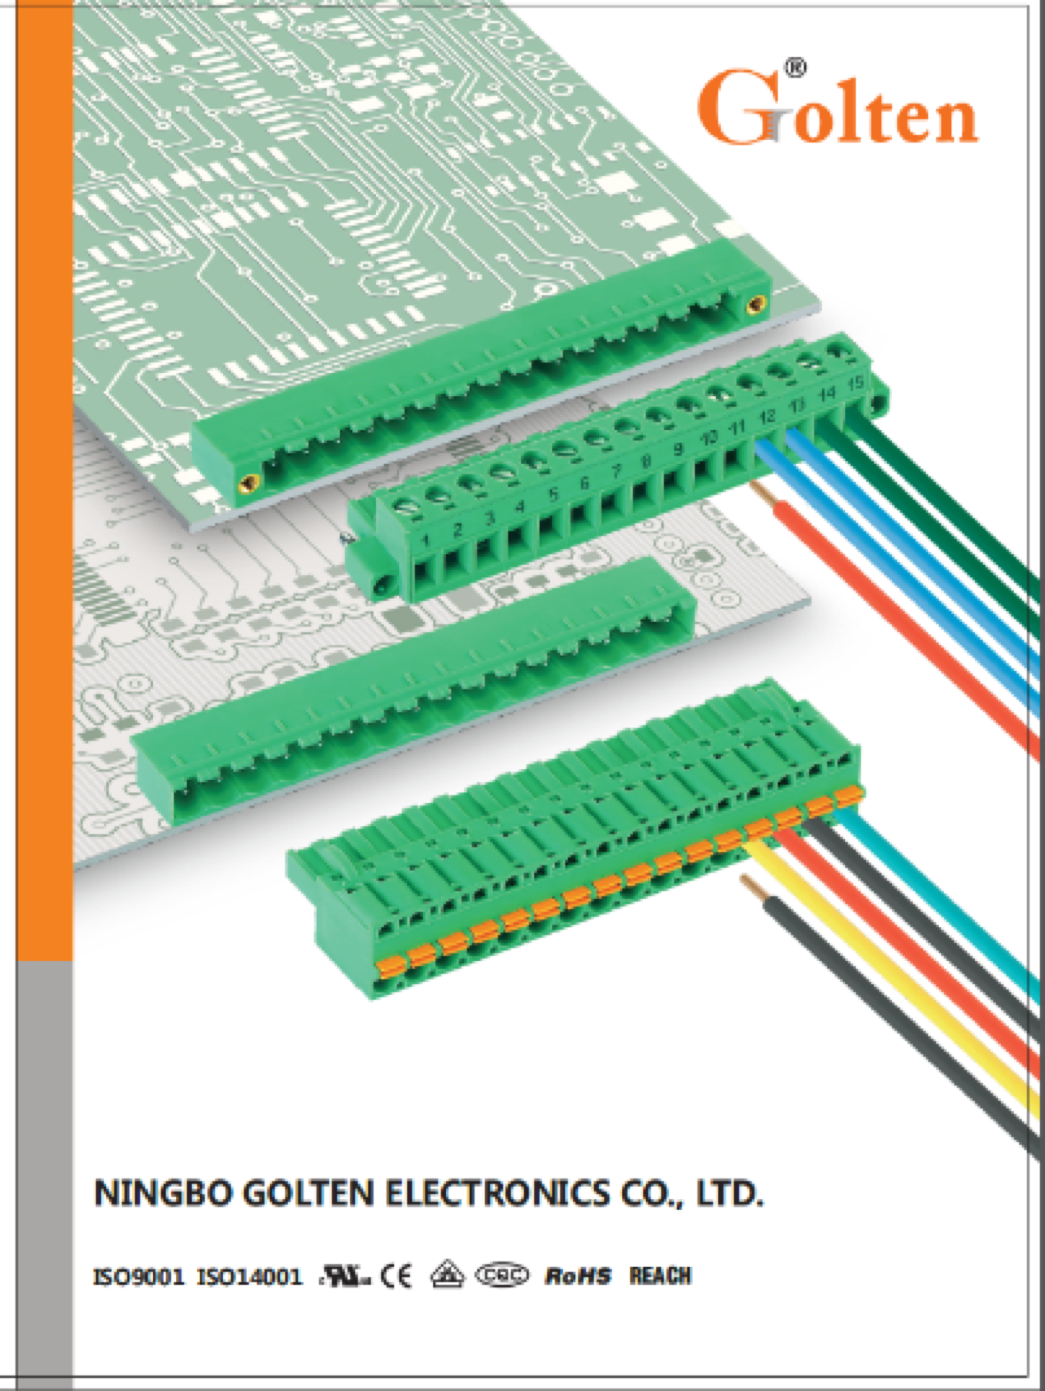 Ningbo Golten Electronics Co